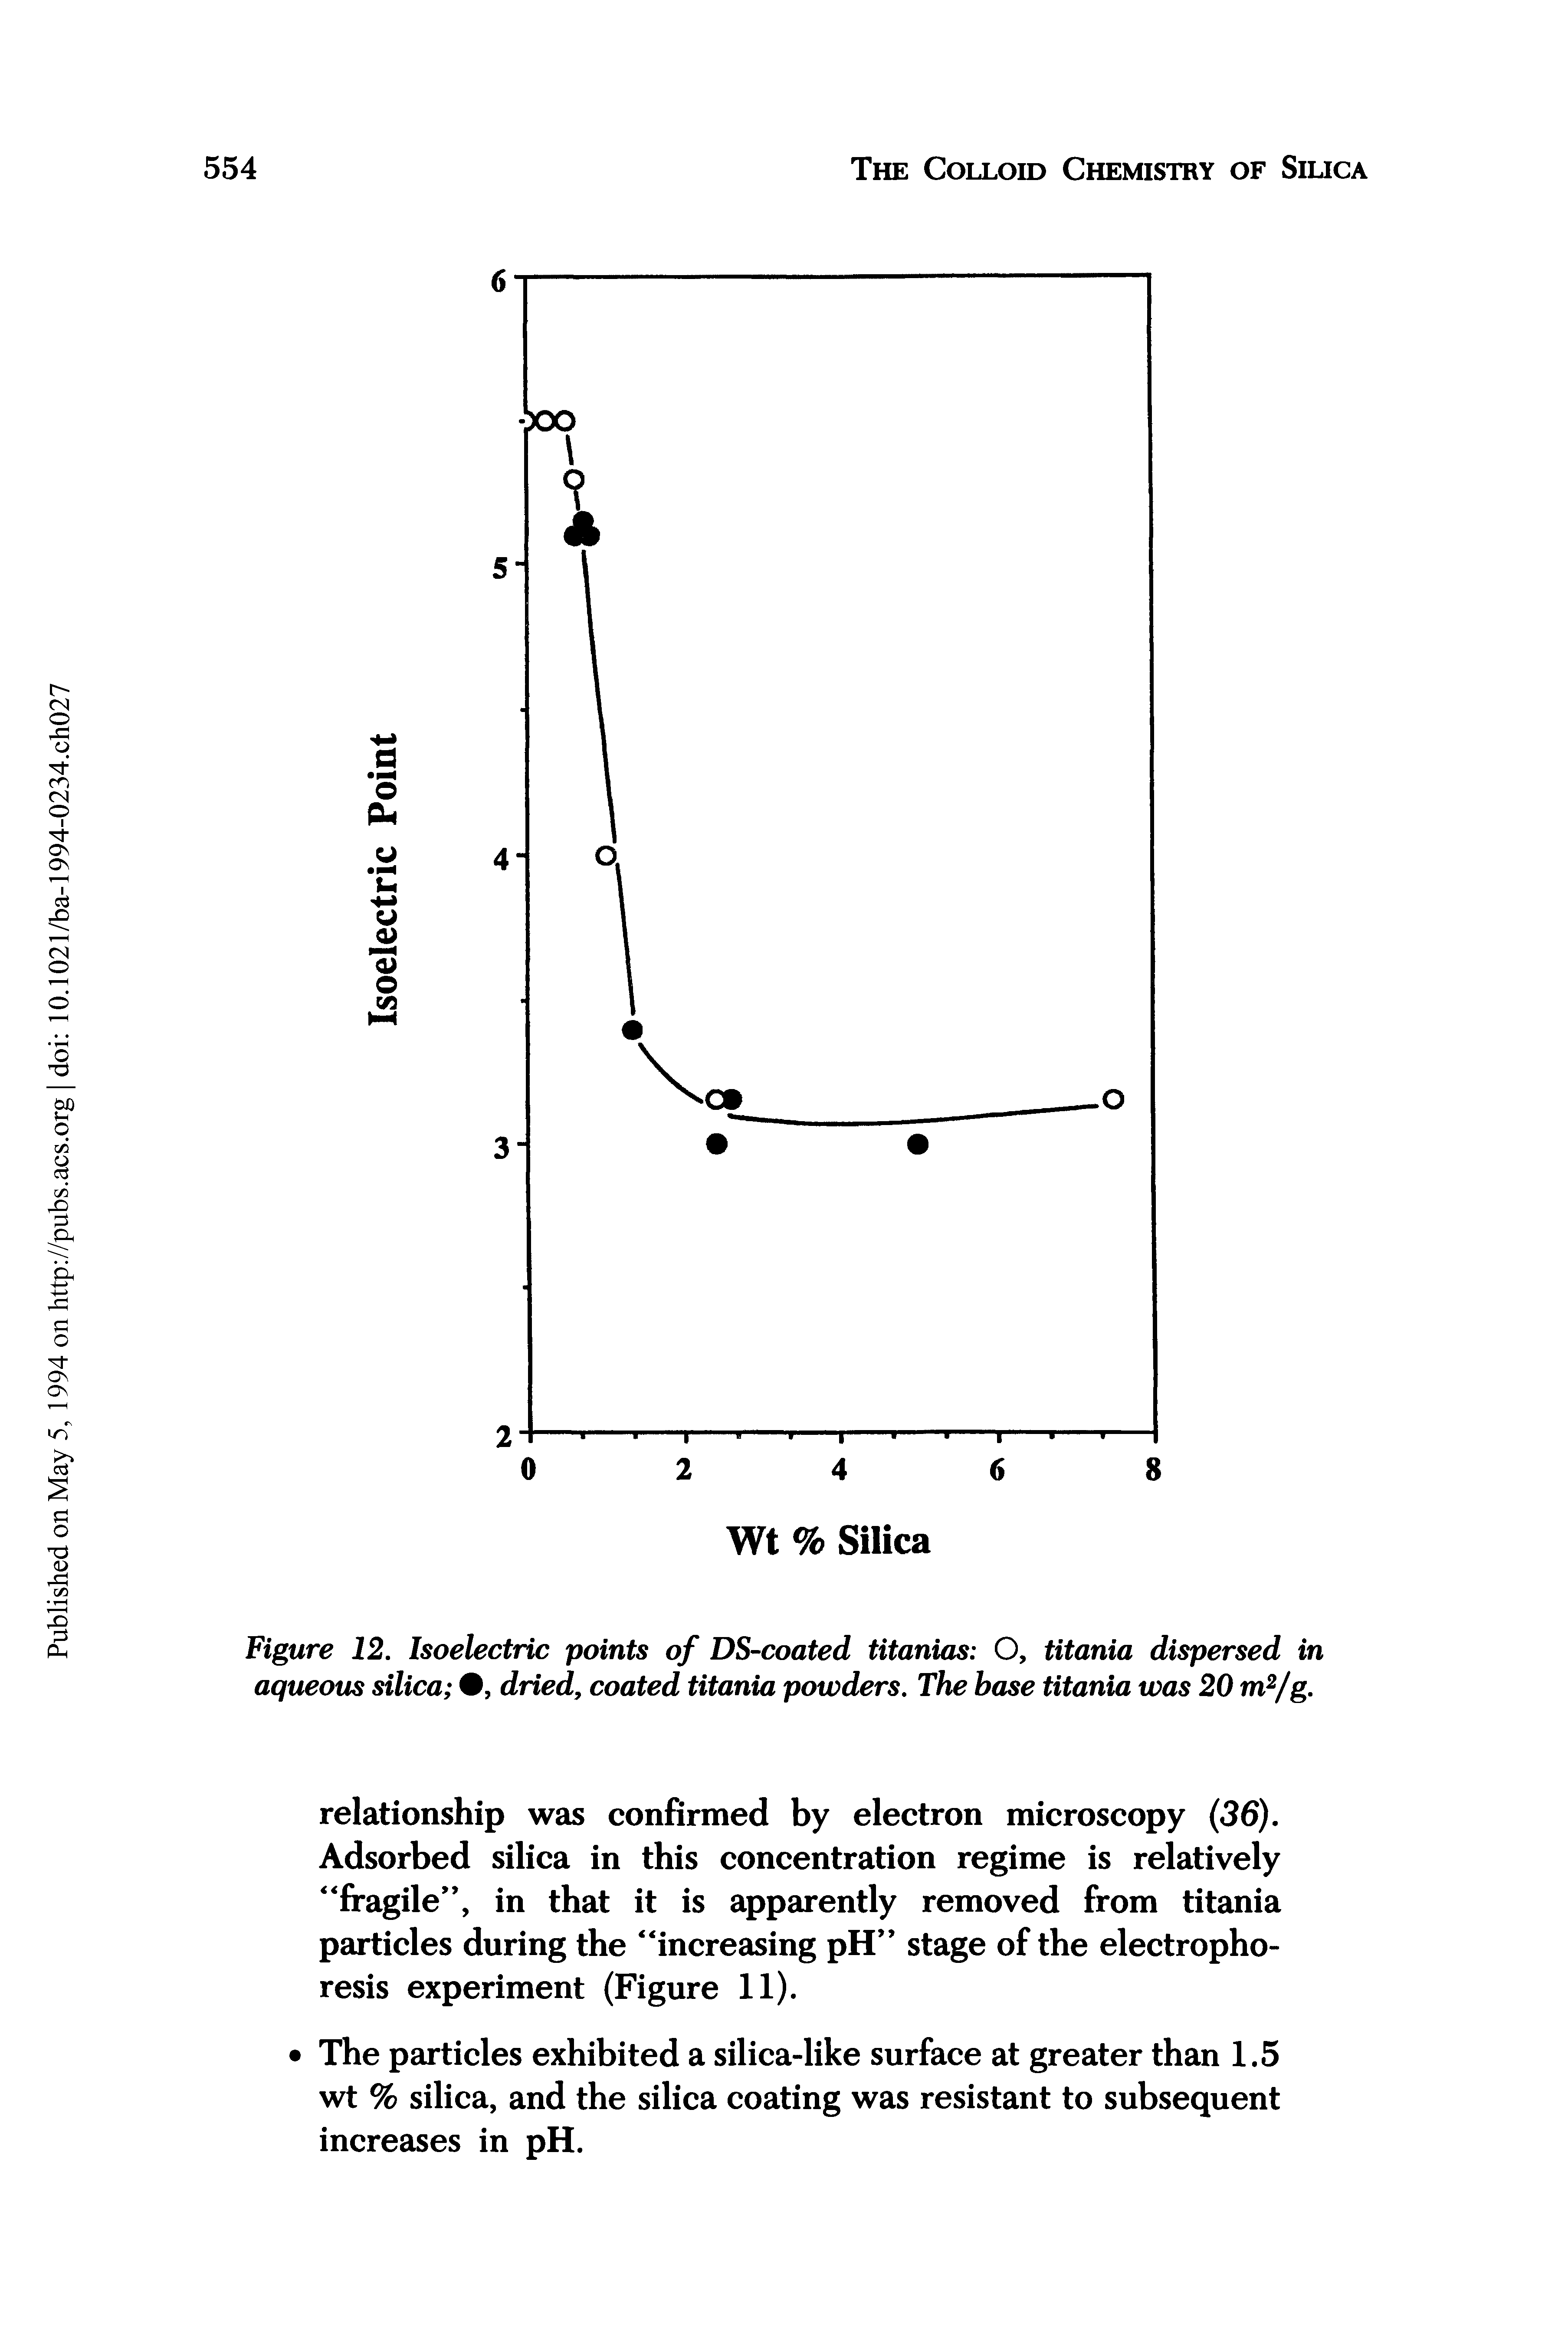 Figure 12. Isoelectric points of DS-coated titanias O, titania dispersed in aqueous silica , dried, coated titania powders. The hose titania was 20 m2/g.